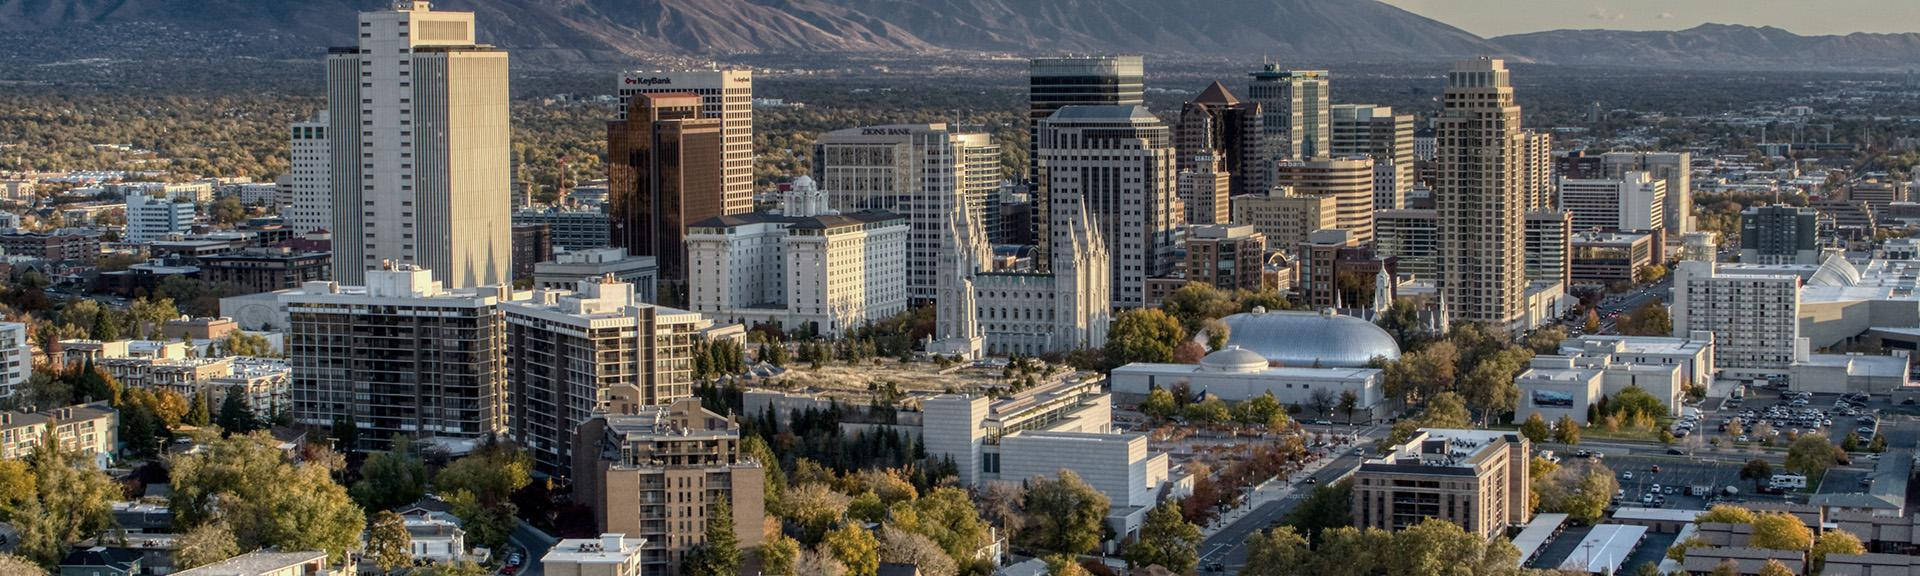 Splendid Skyline View Of Salt Lake City, Utah Background